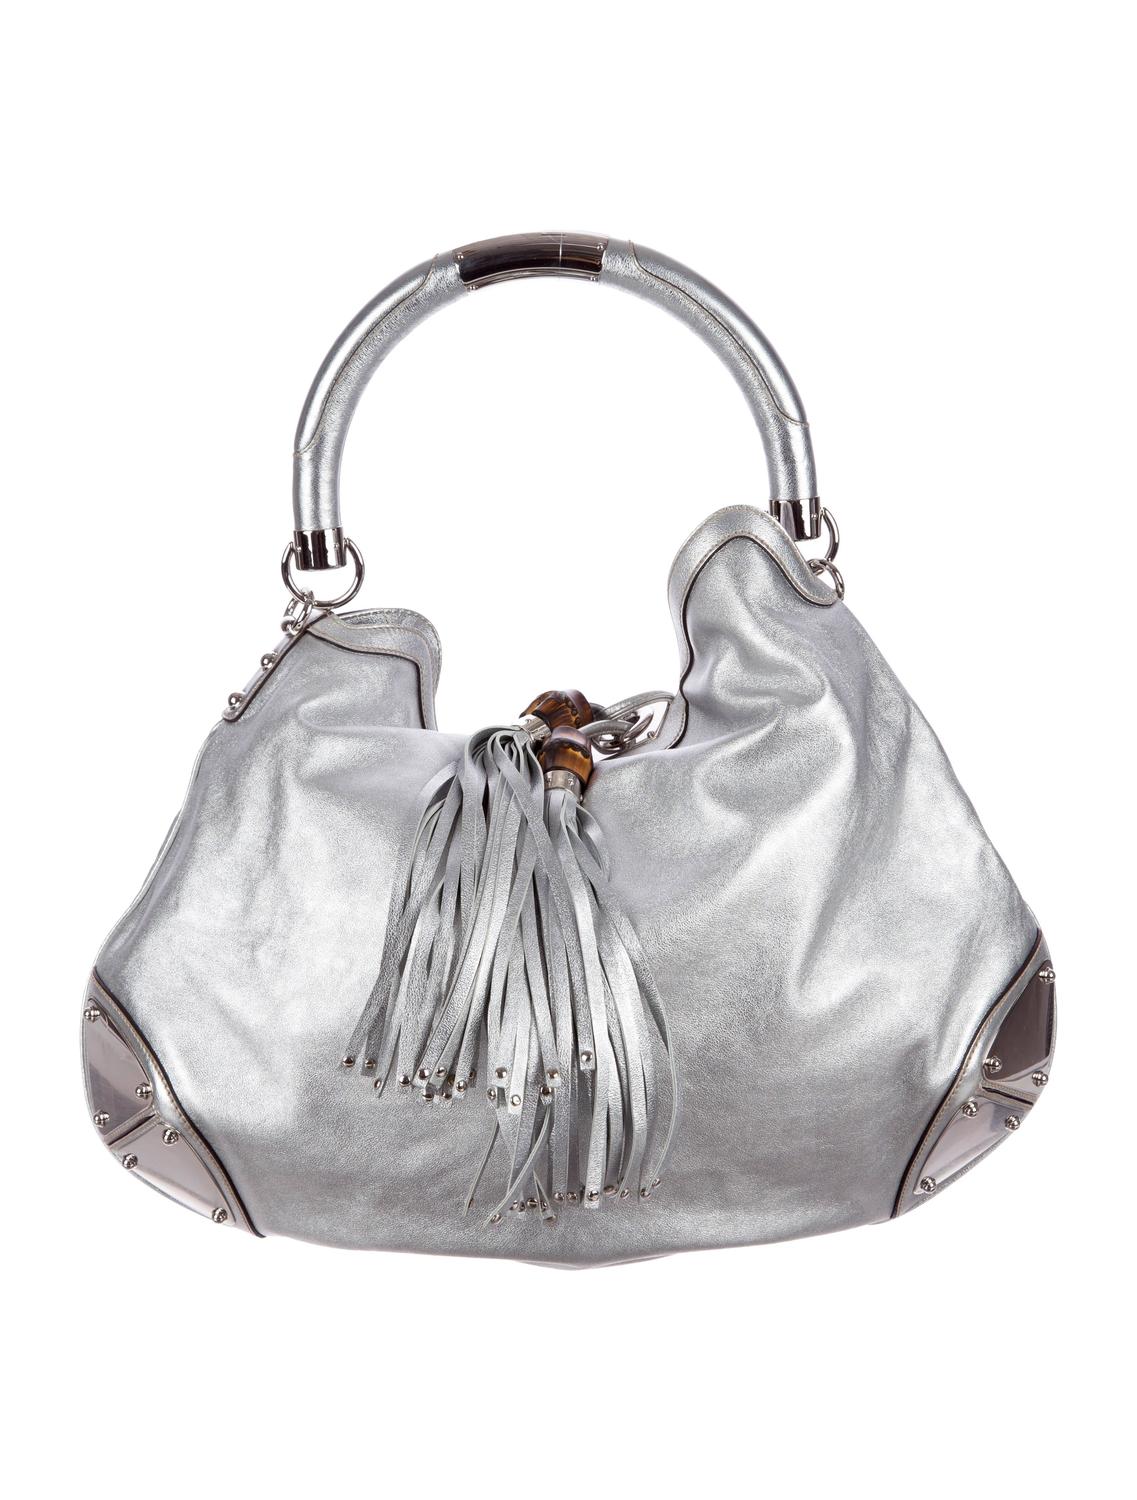 Large Metallic Silver Handbags | SEMA Data Co-op